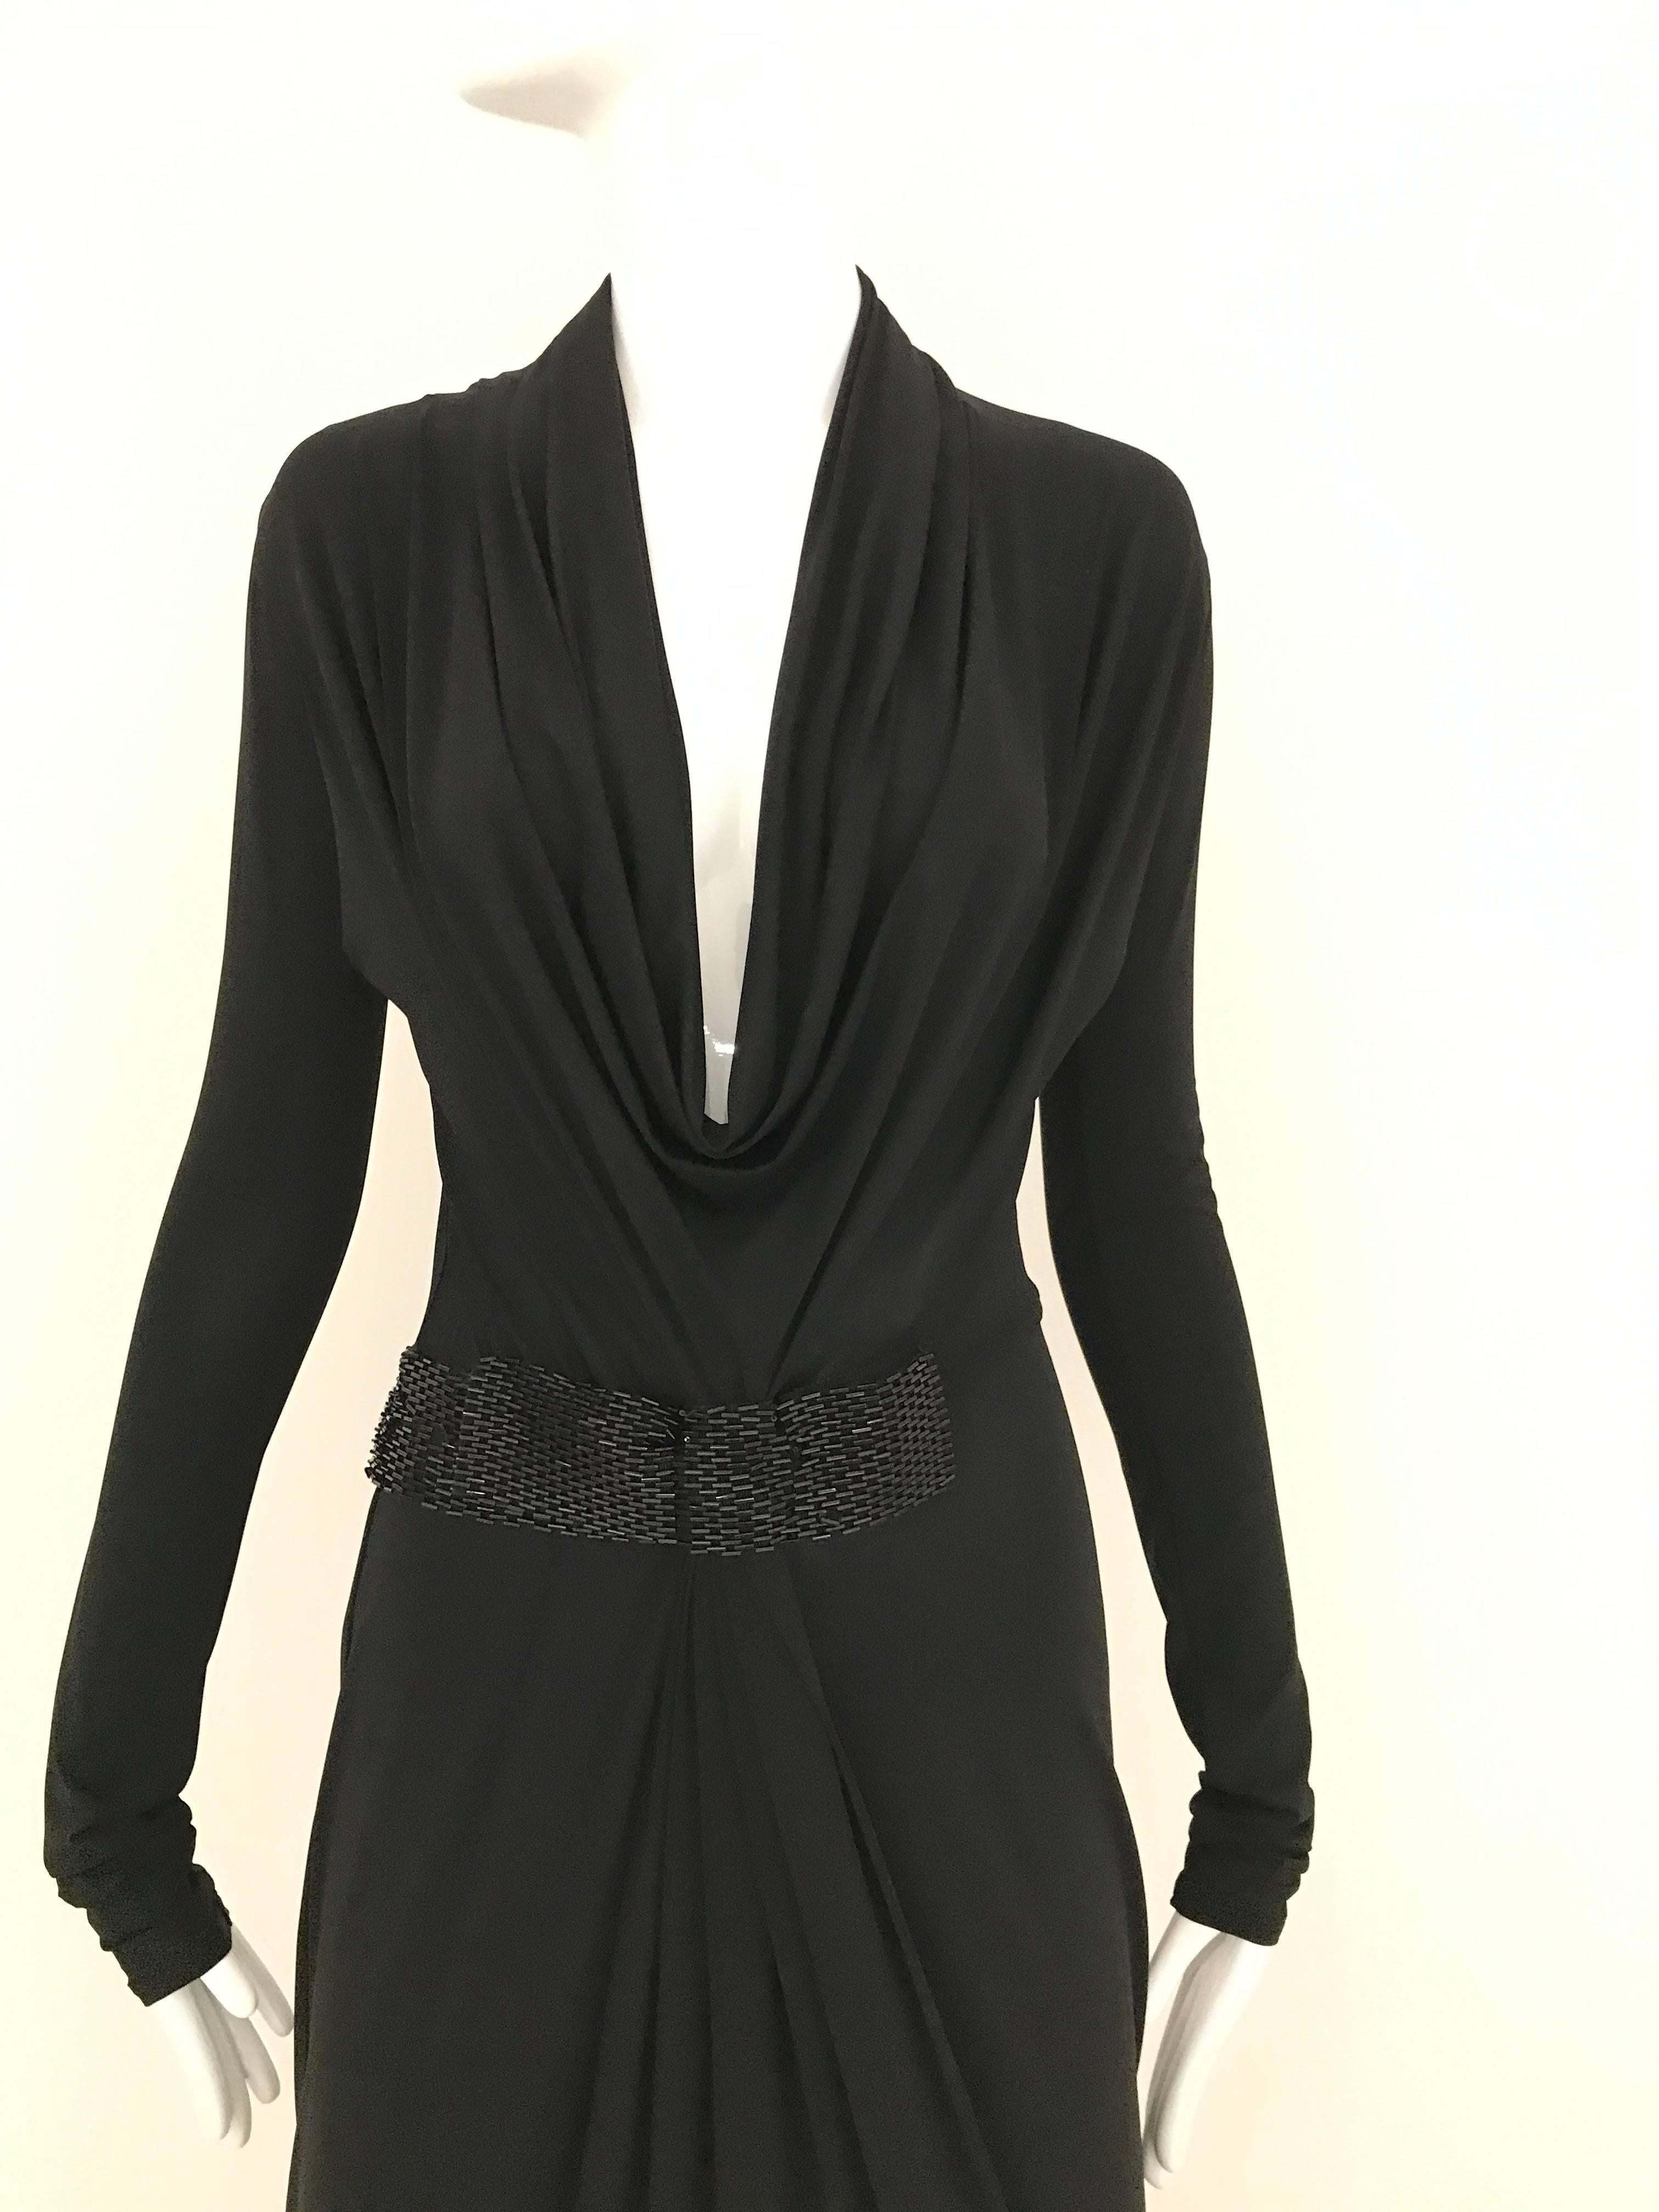 Women's 1990s Gianfranco Ferre Black Knit Jersey Cocktail Dress For Sale